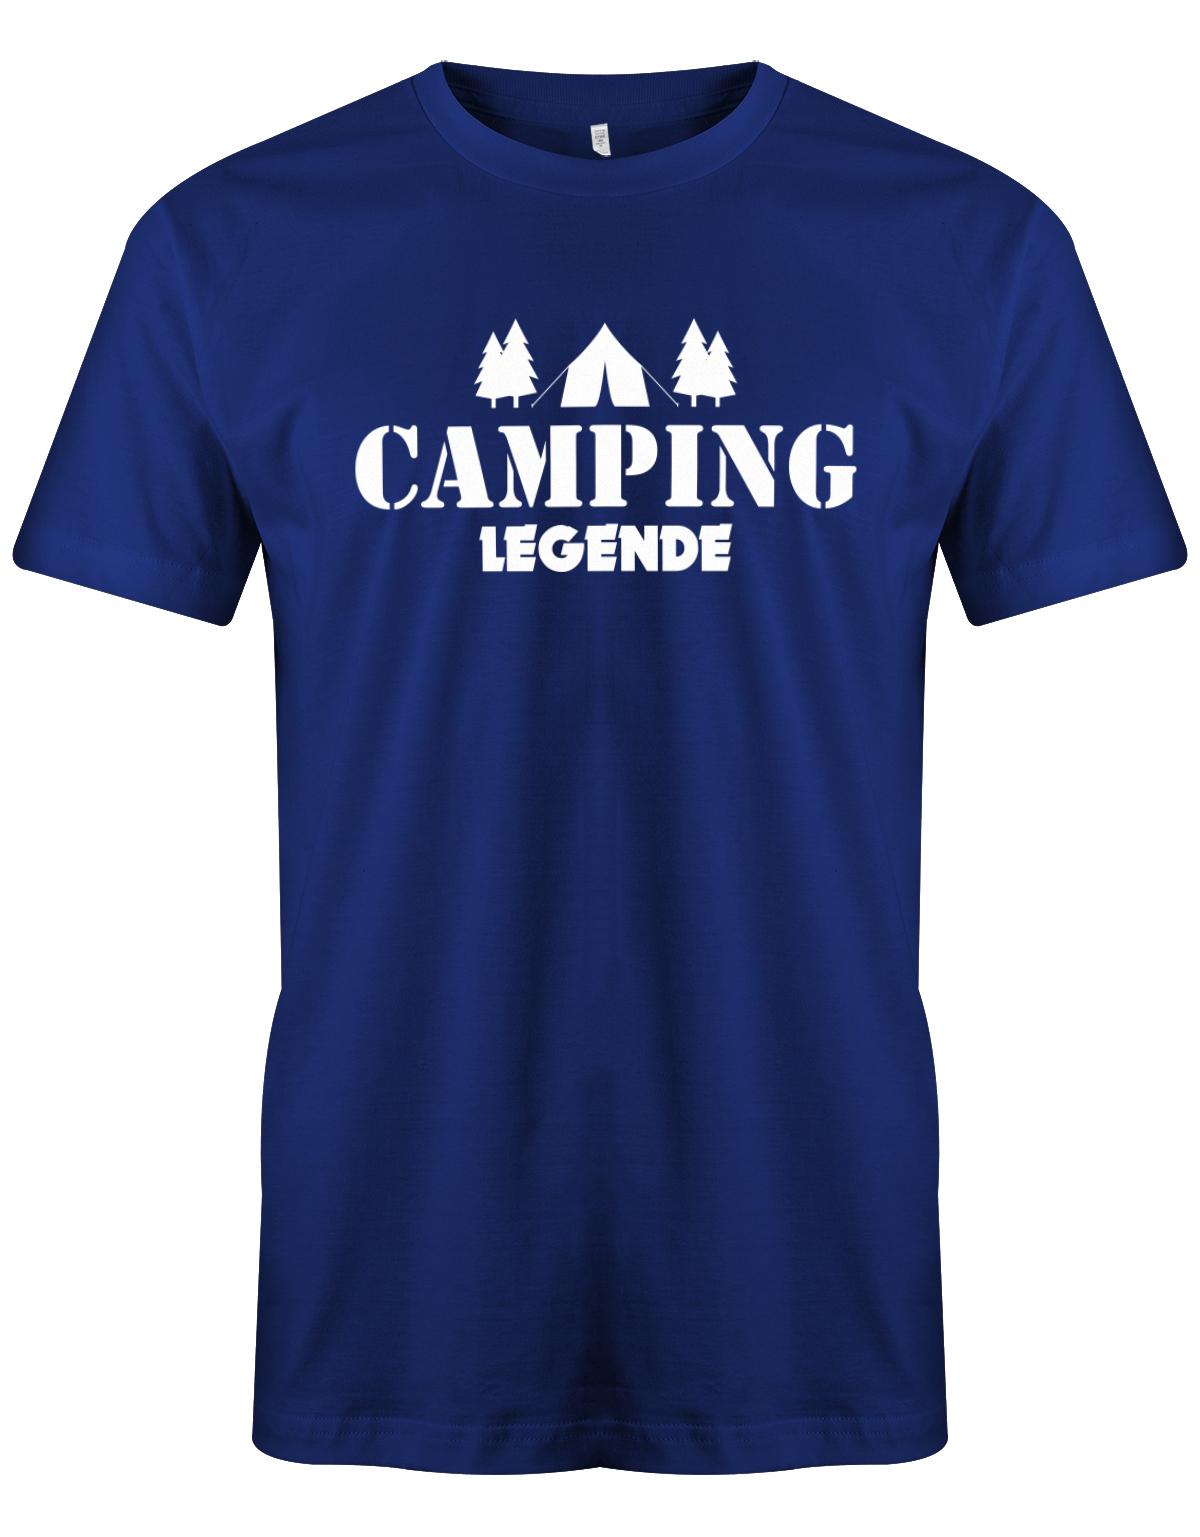 Camping-Legende-Herren-Shirt-royalblau